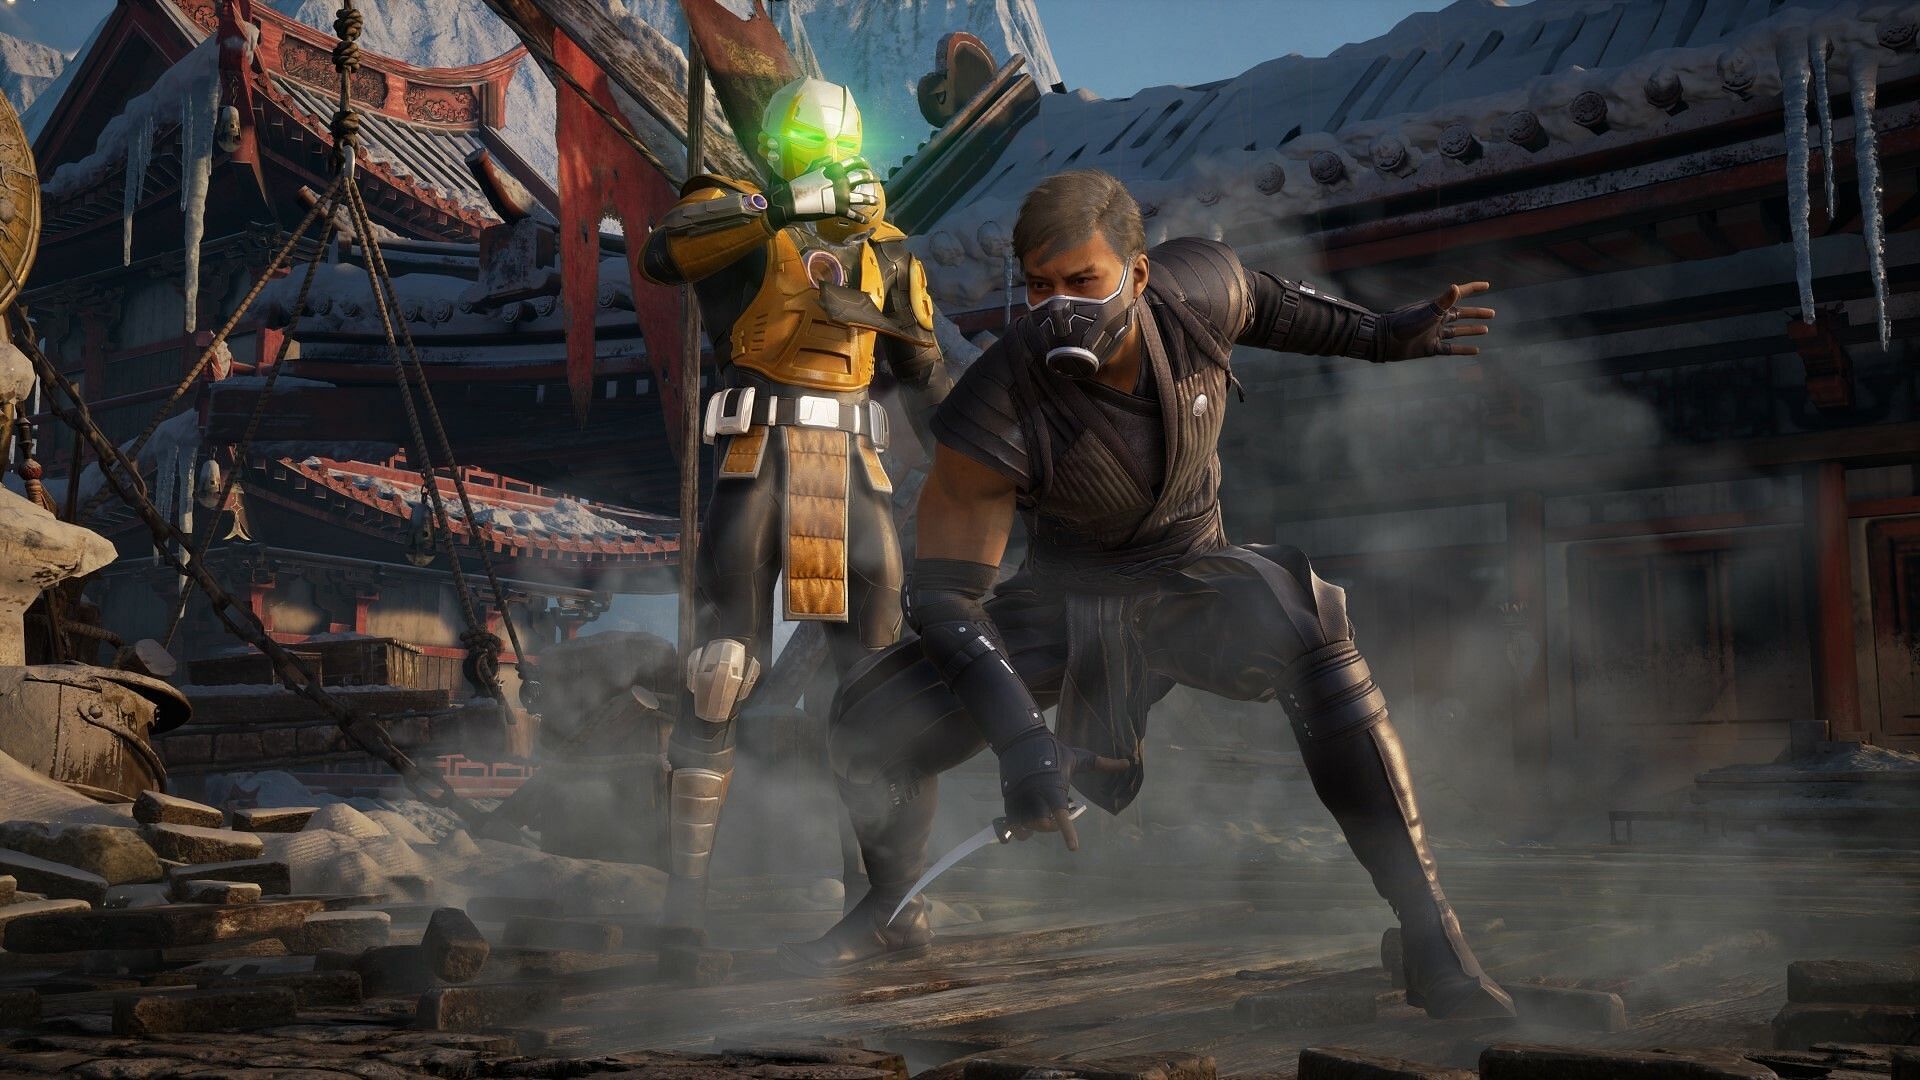 Mortal Kombat 1 Kombat Pack release date window and confirmed content